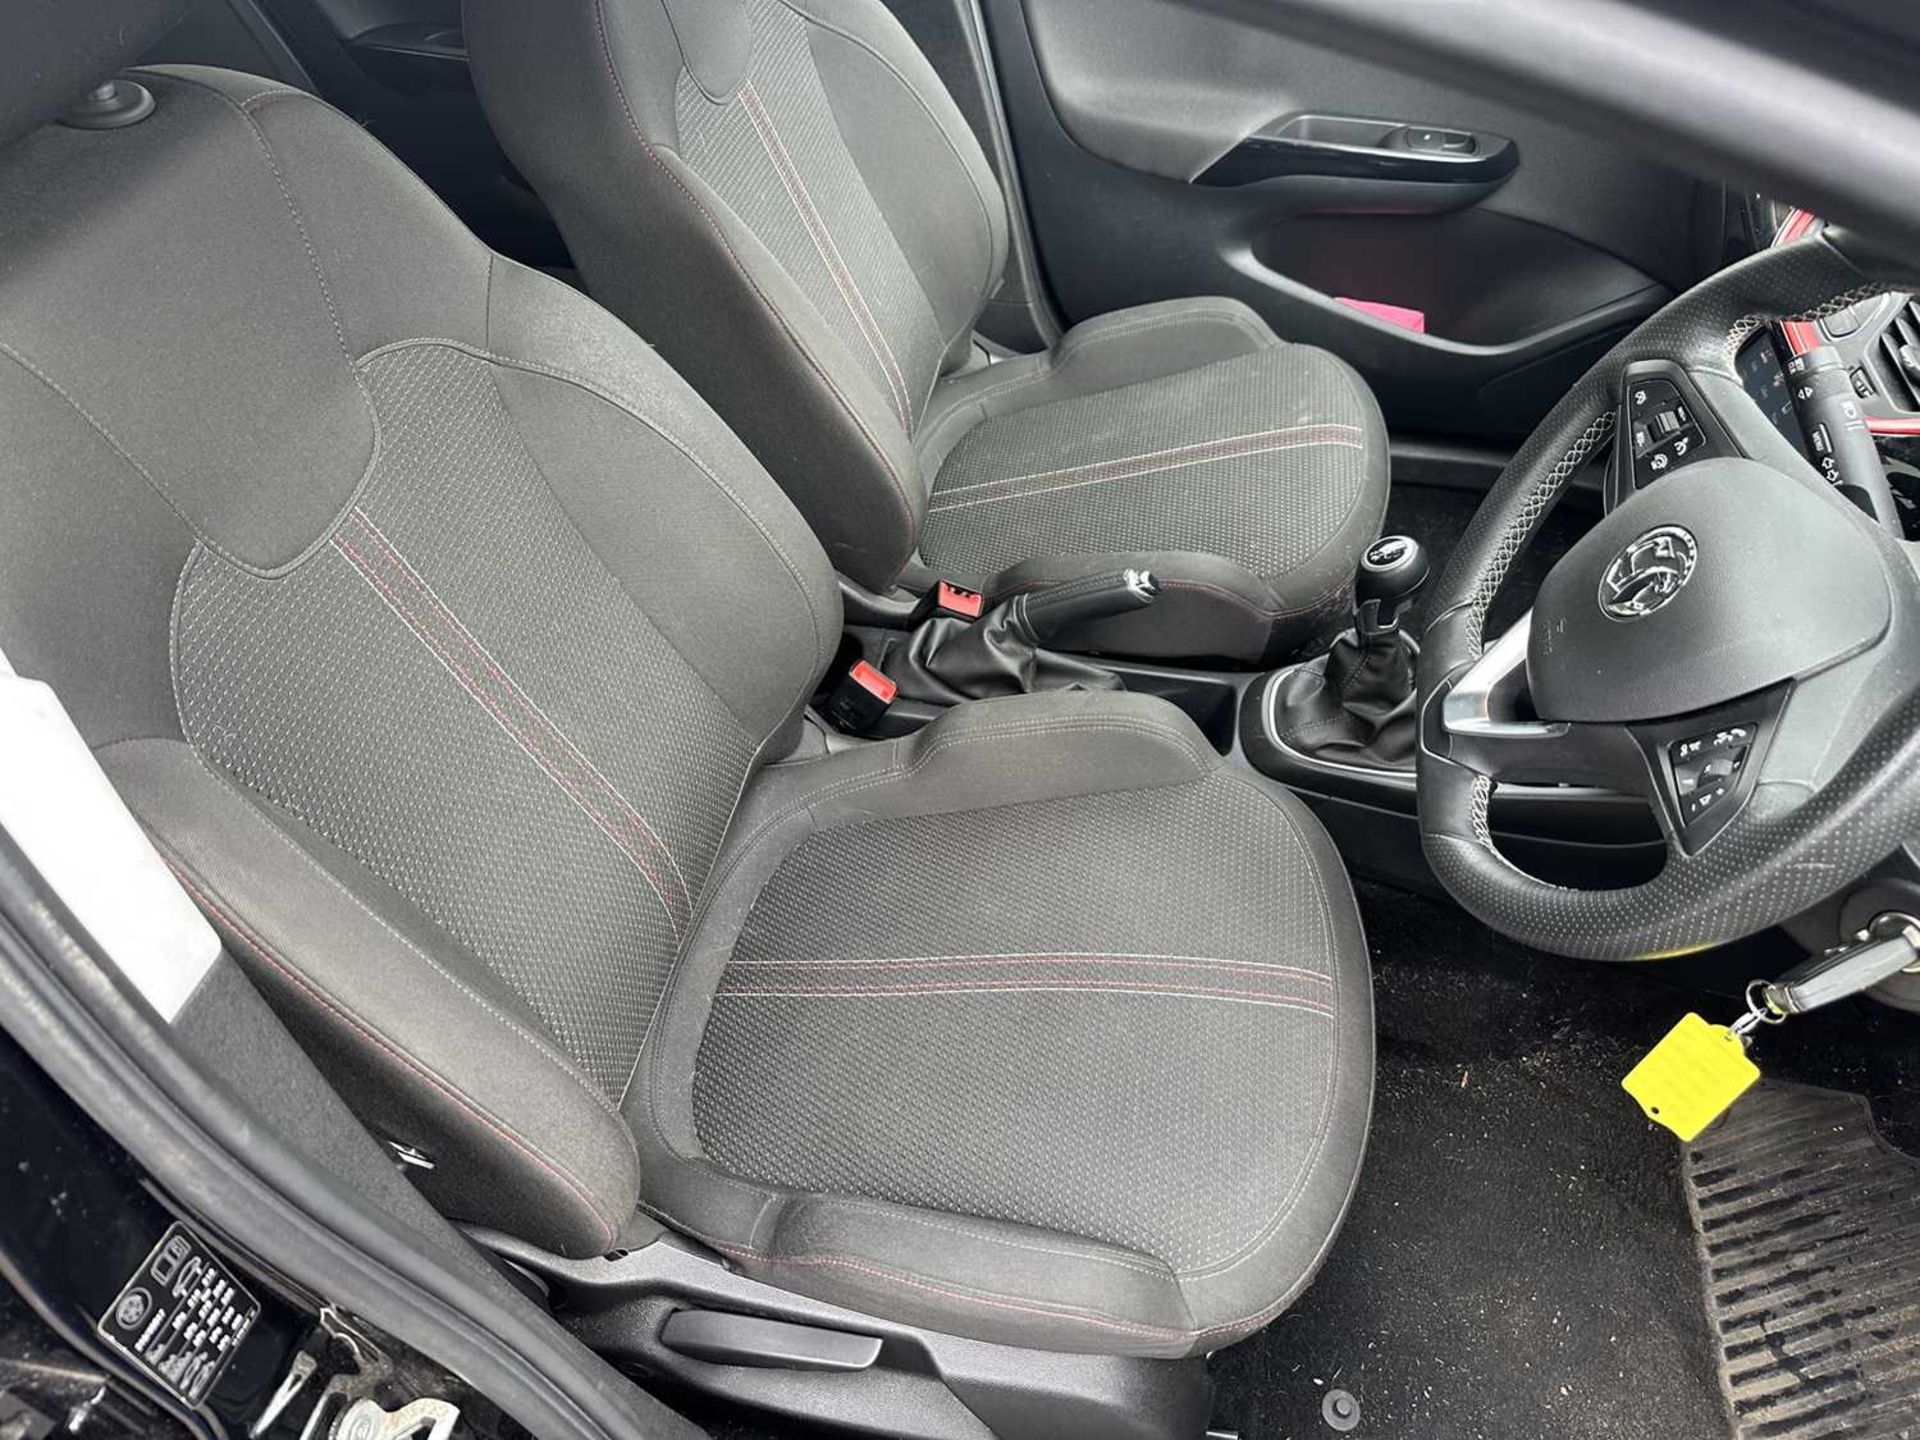 2019 Vauxhall Corsa SRI VX - Line Nav Black, 5 door hatchback, manual, reg. no. VU19 RYK - Bild 11 aus 15